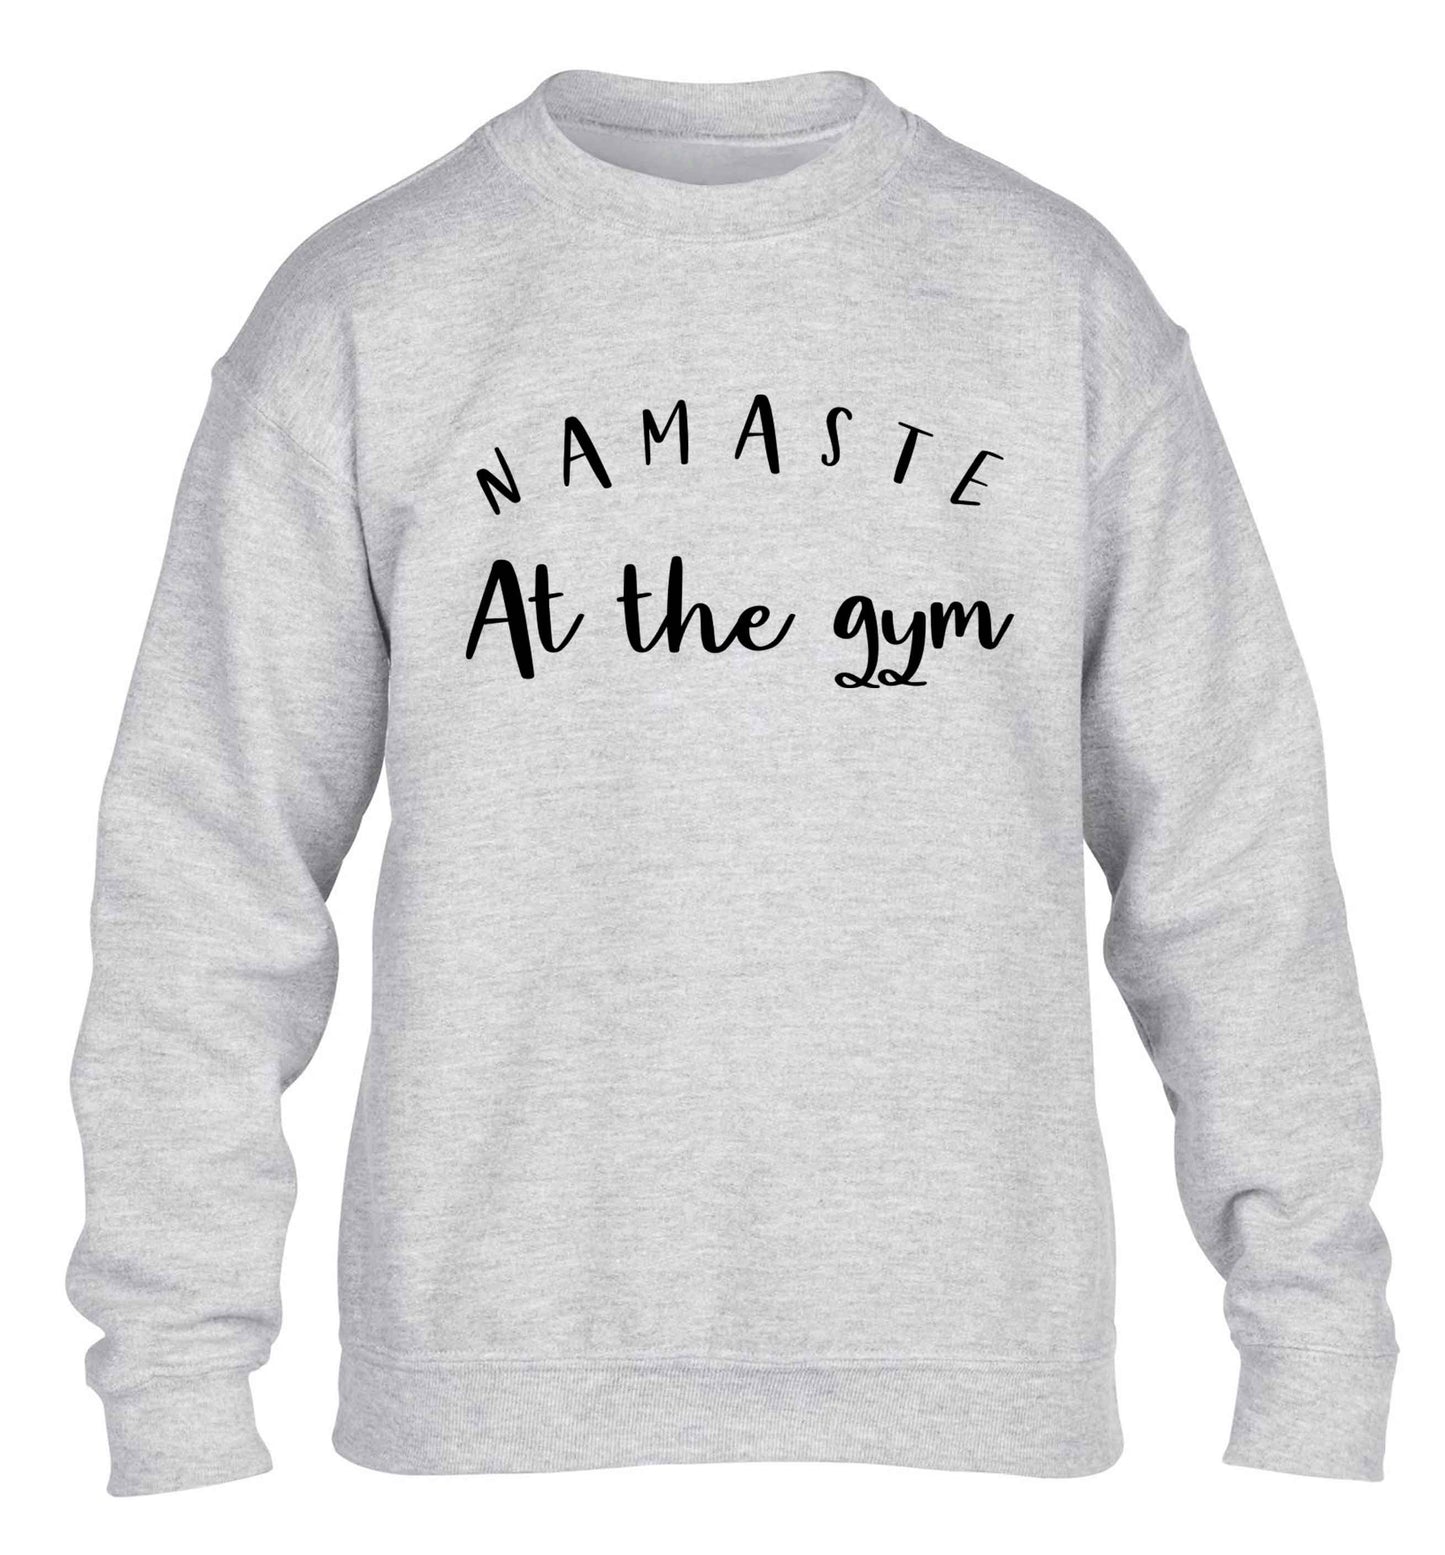 Namaste at the gym children's grey sweater 12-13 Years